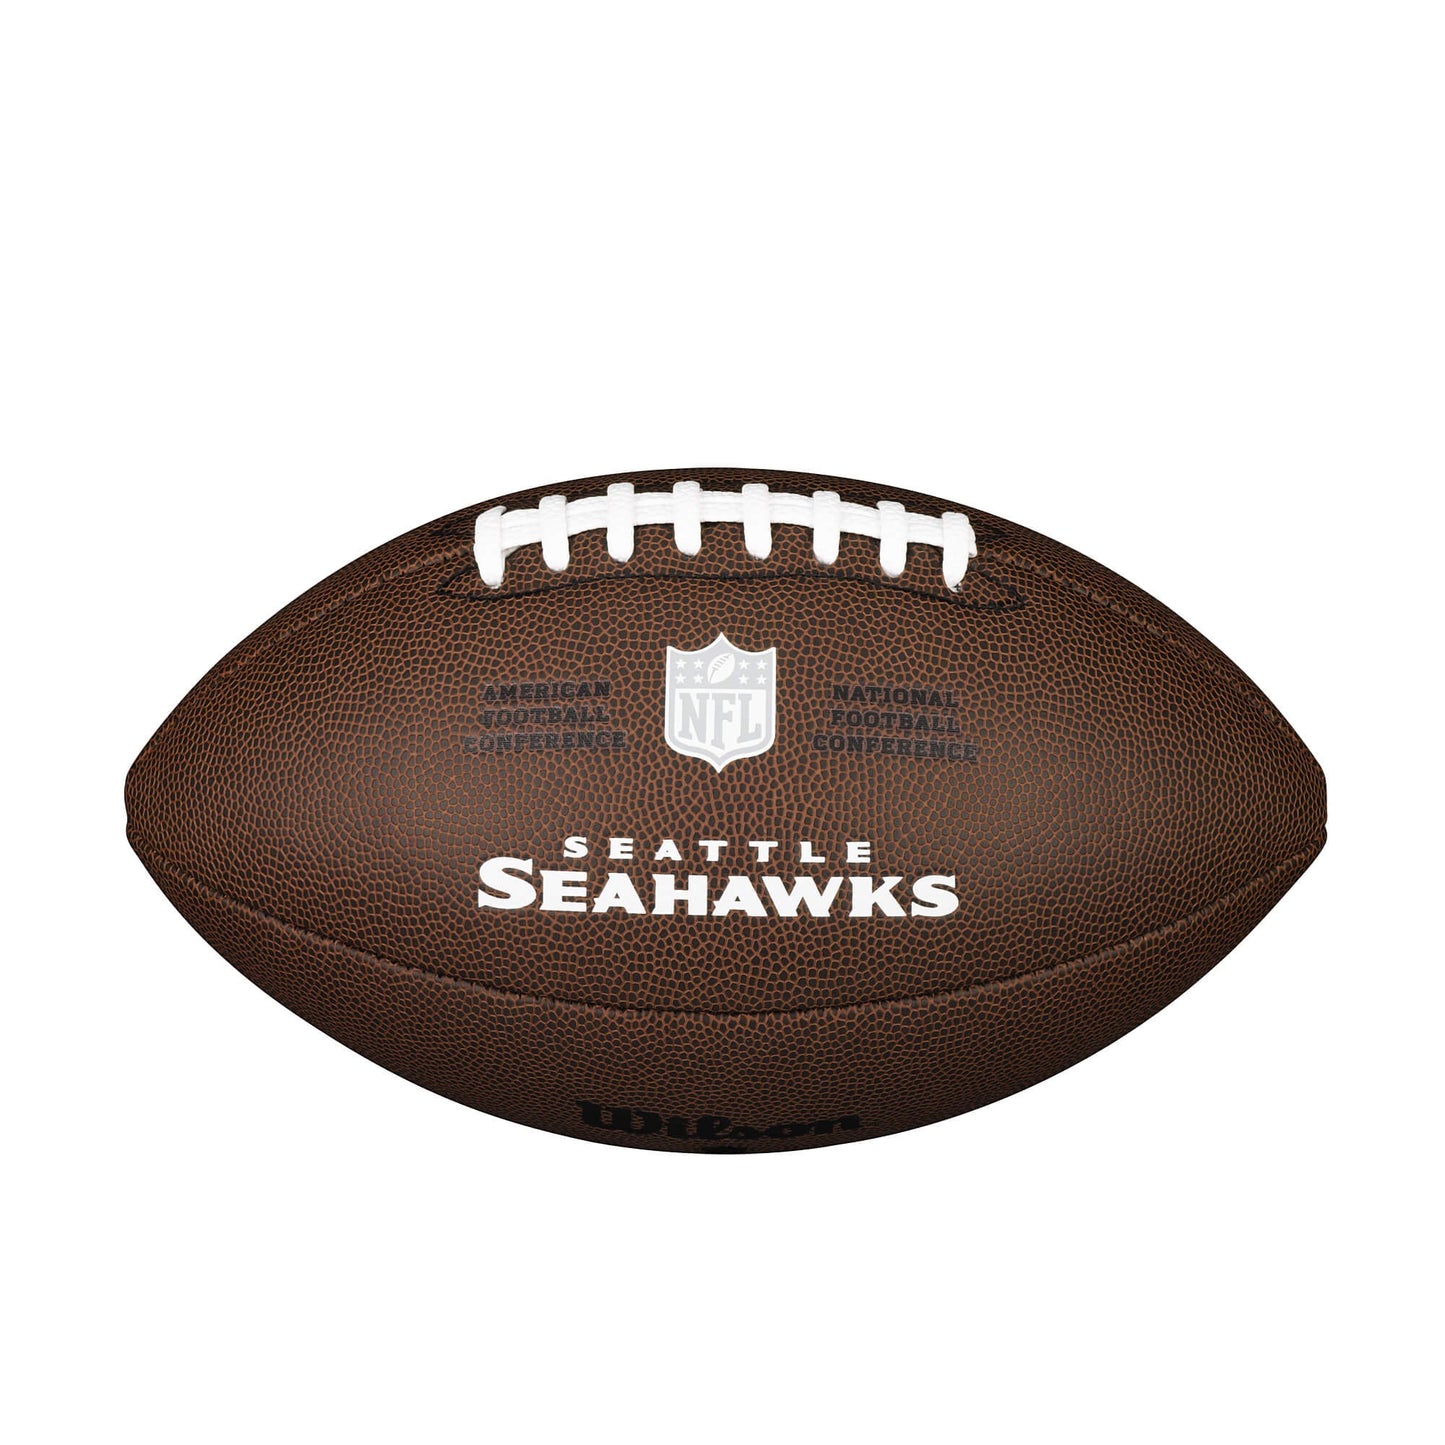 Wilson NFL Licensed Football Seattle Seahawks Brown (sz. official)